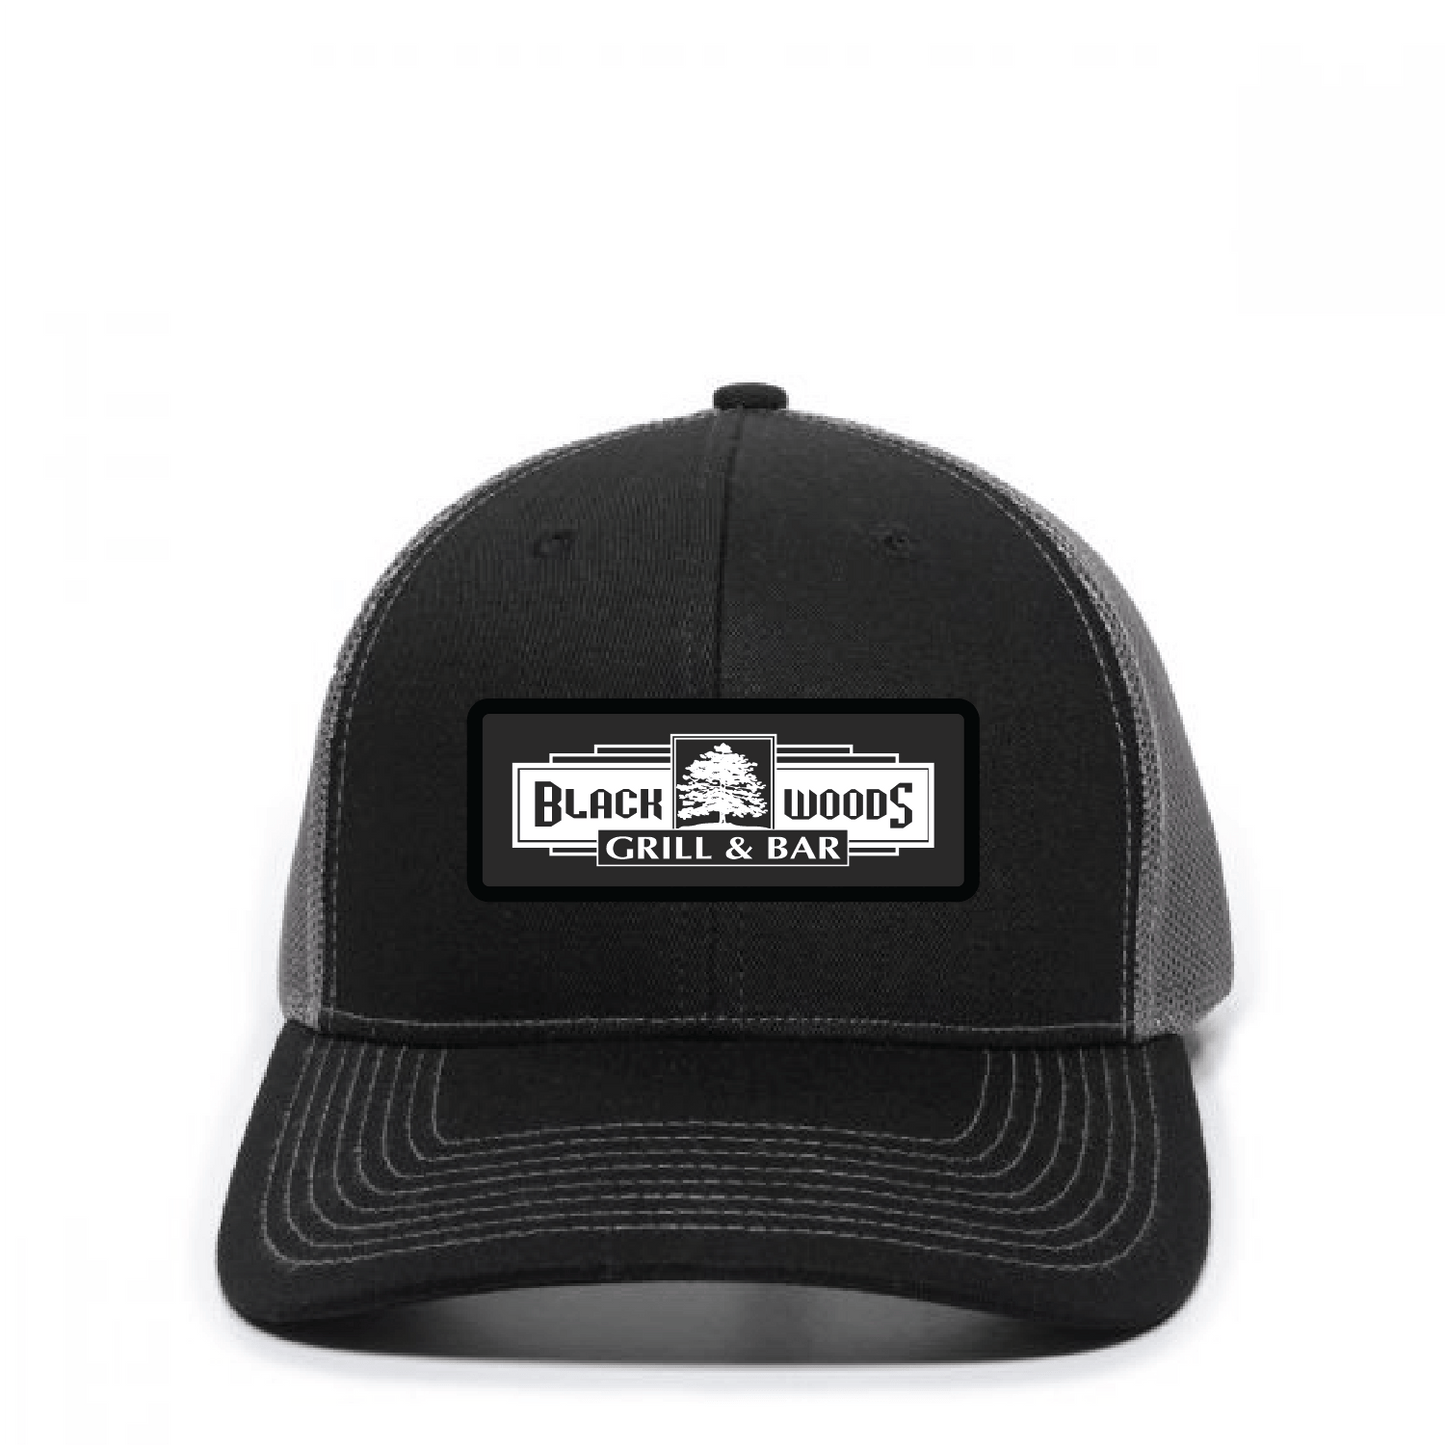 Wholesale Black Woods Trucker Hat - DSP On Demand